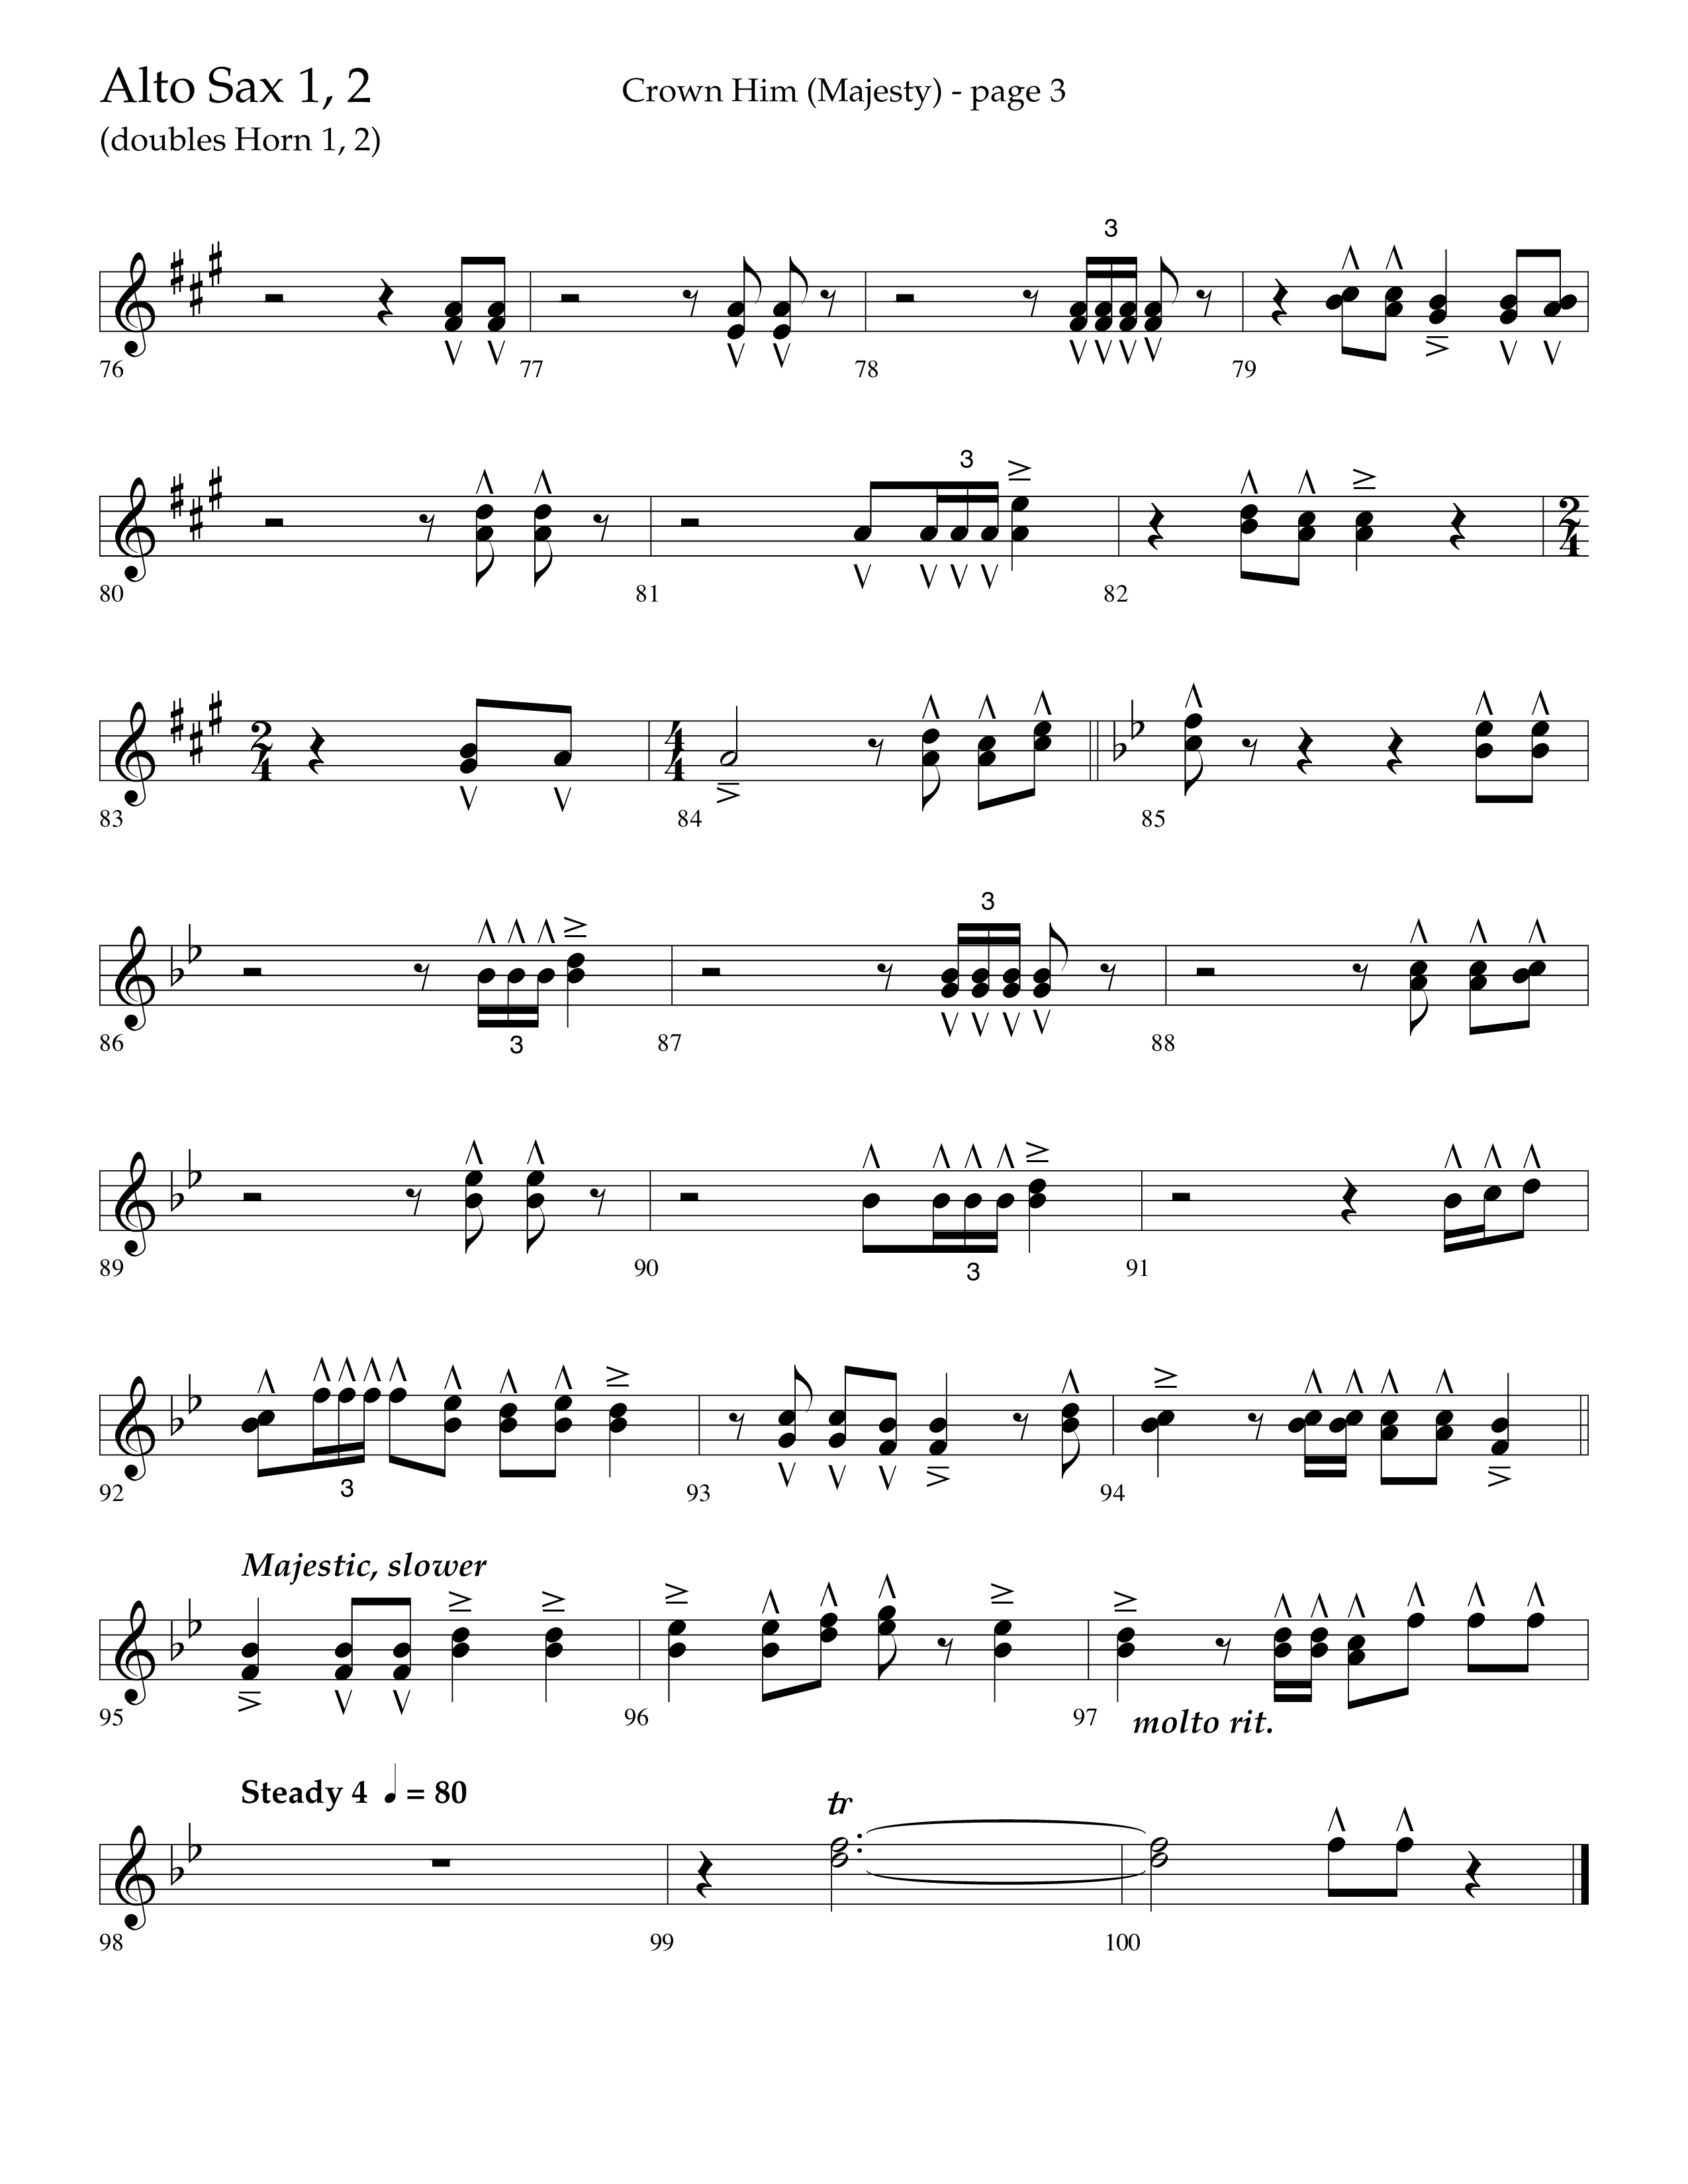 Crown Him (Majesty) (Choral Anthem SATB) Alto Sax 1/2 (Lifeway Choral / Arr. David T. Clydesdale)